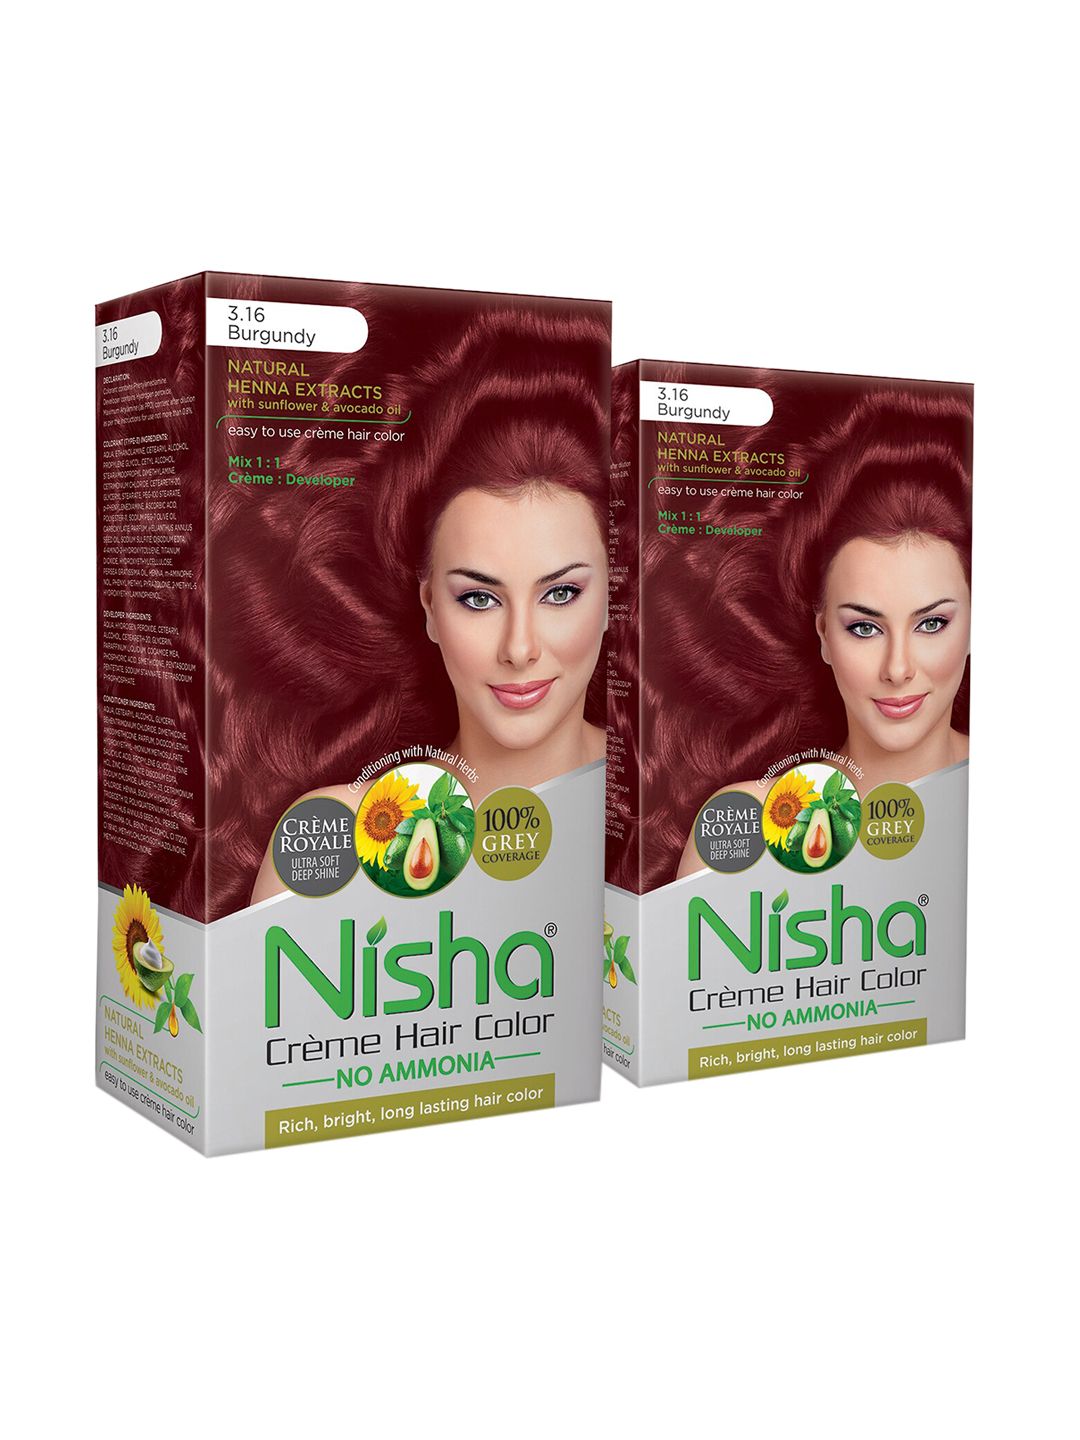 Nisha Pack of 2 Creme Hair Colour 240g - Burgundy Price in India